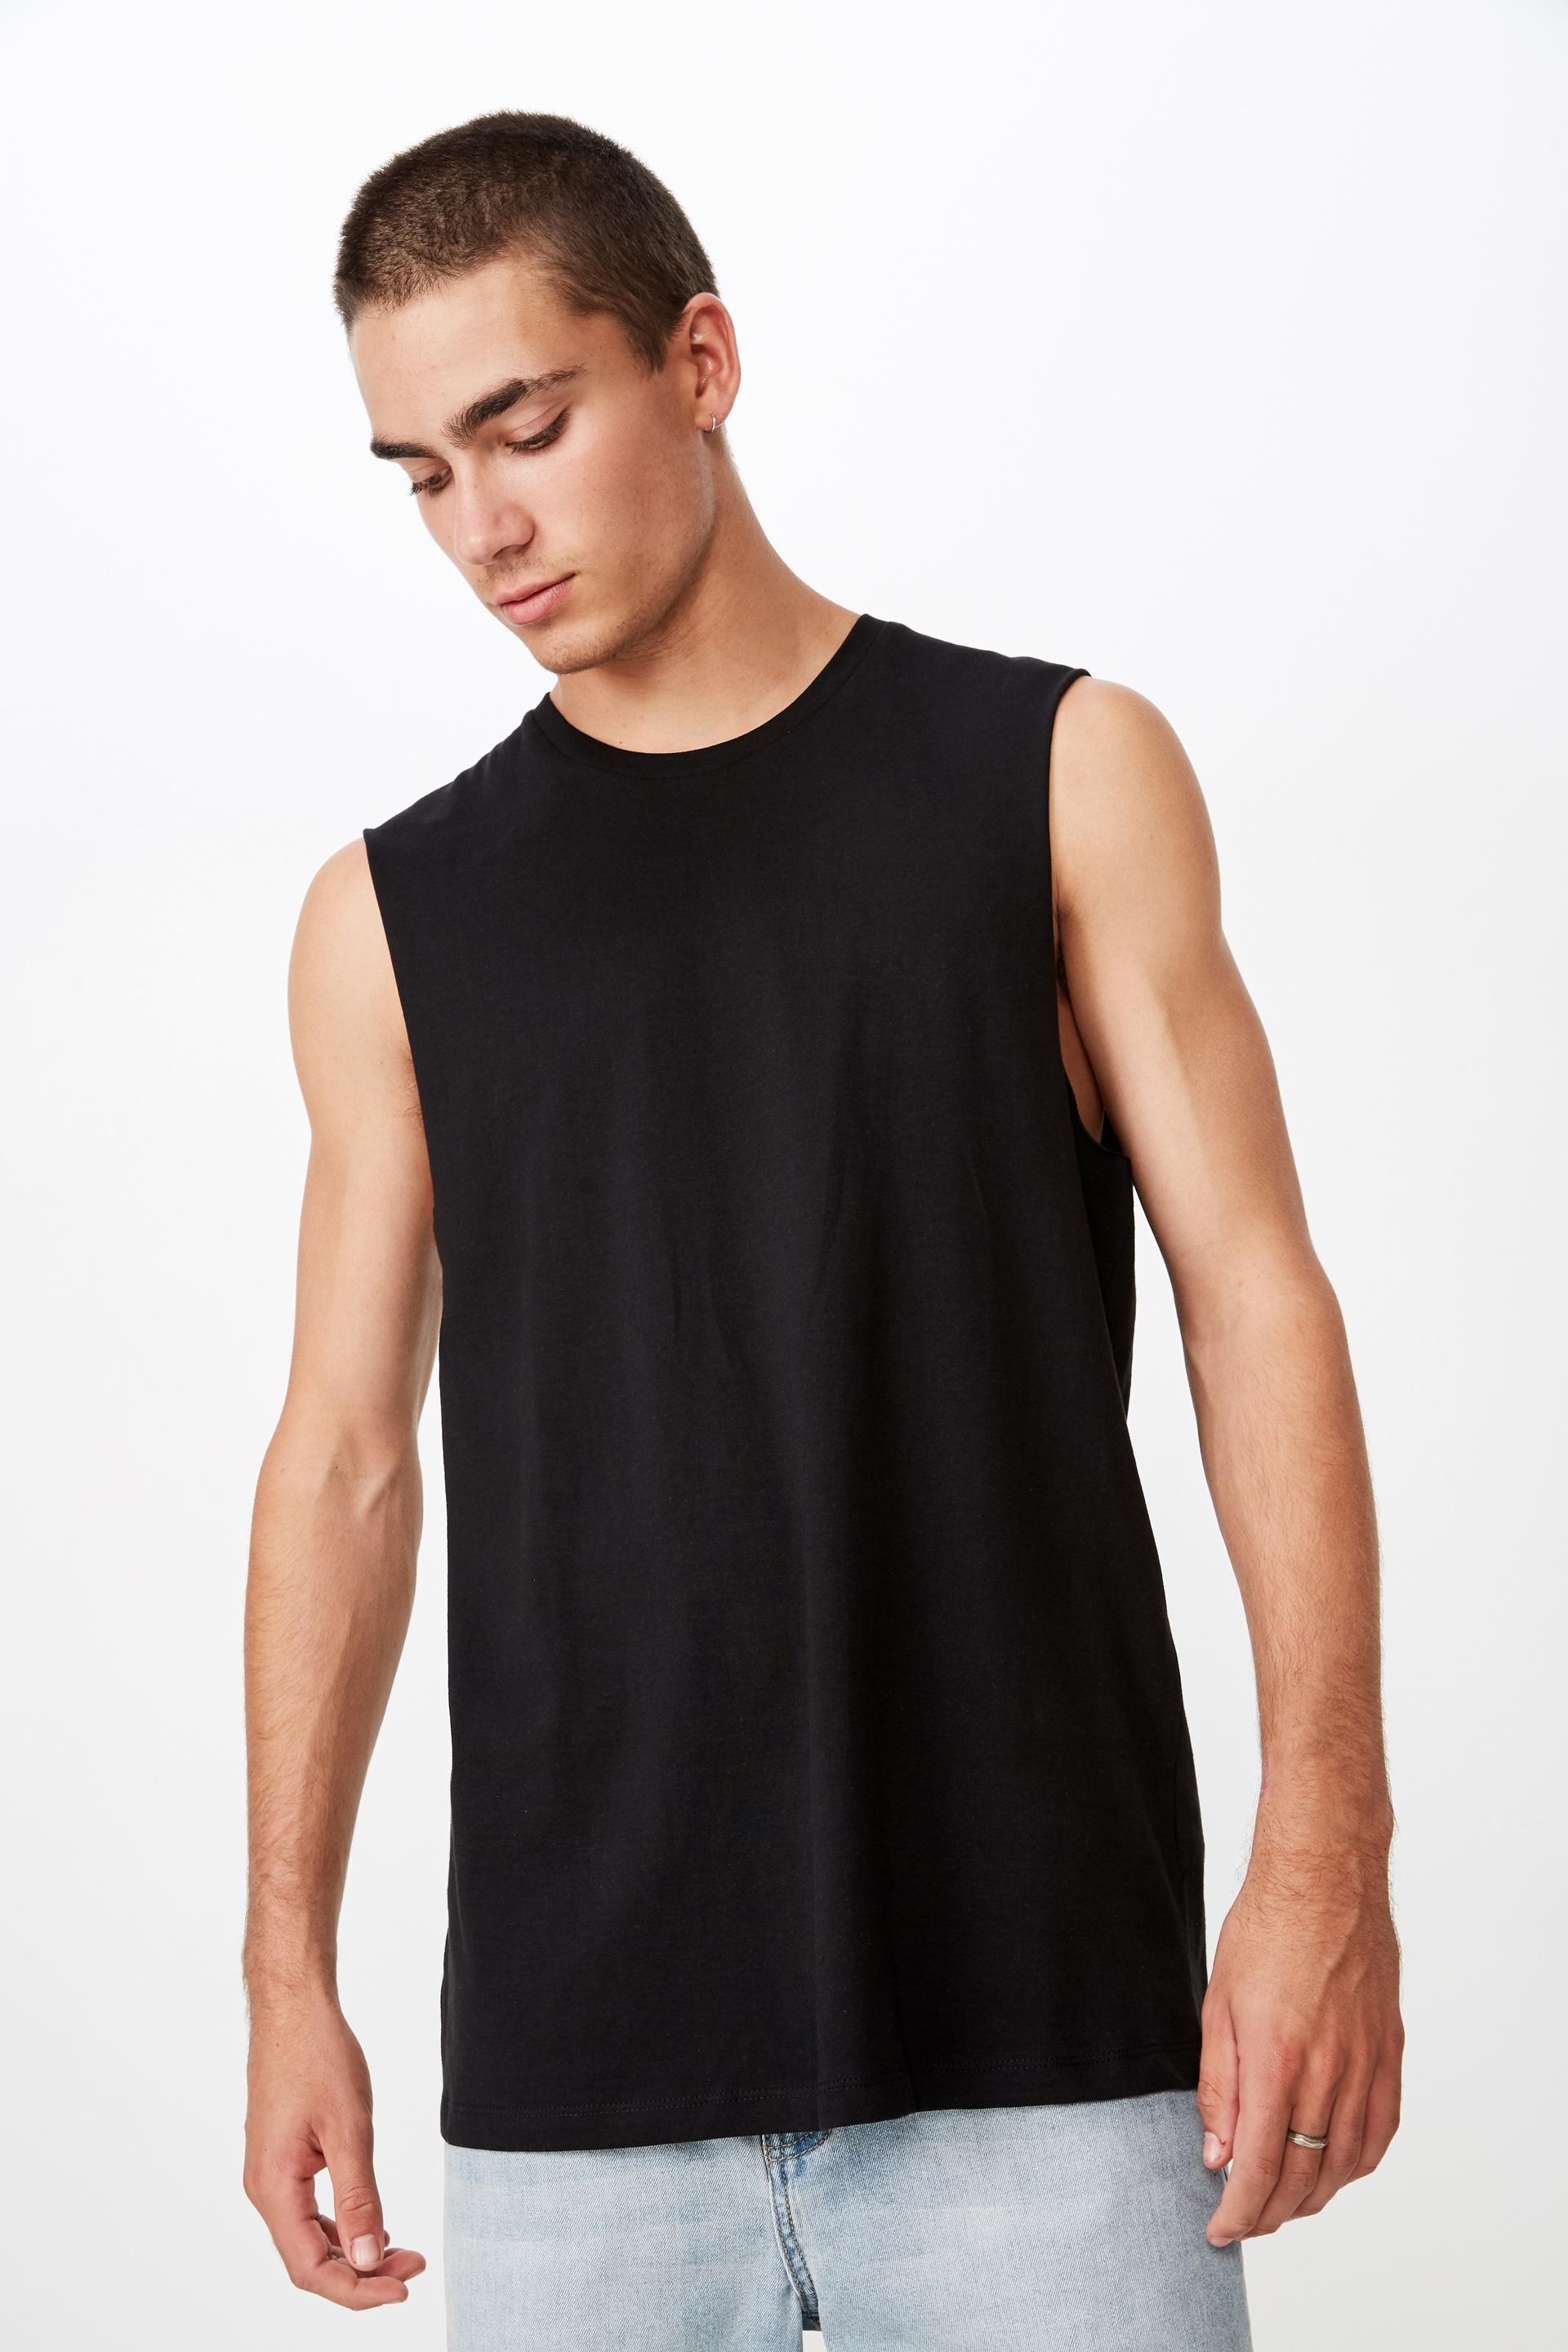 Essential muscle tank - black Cotton On T-Shirts & Vests | Superbalist.com